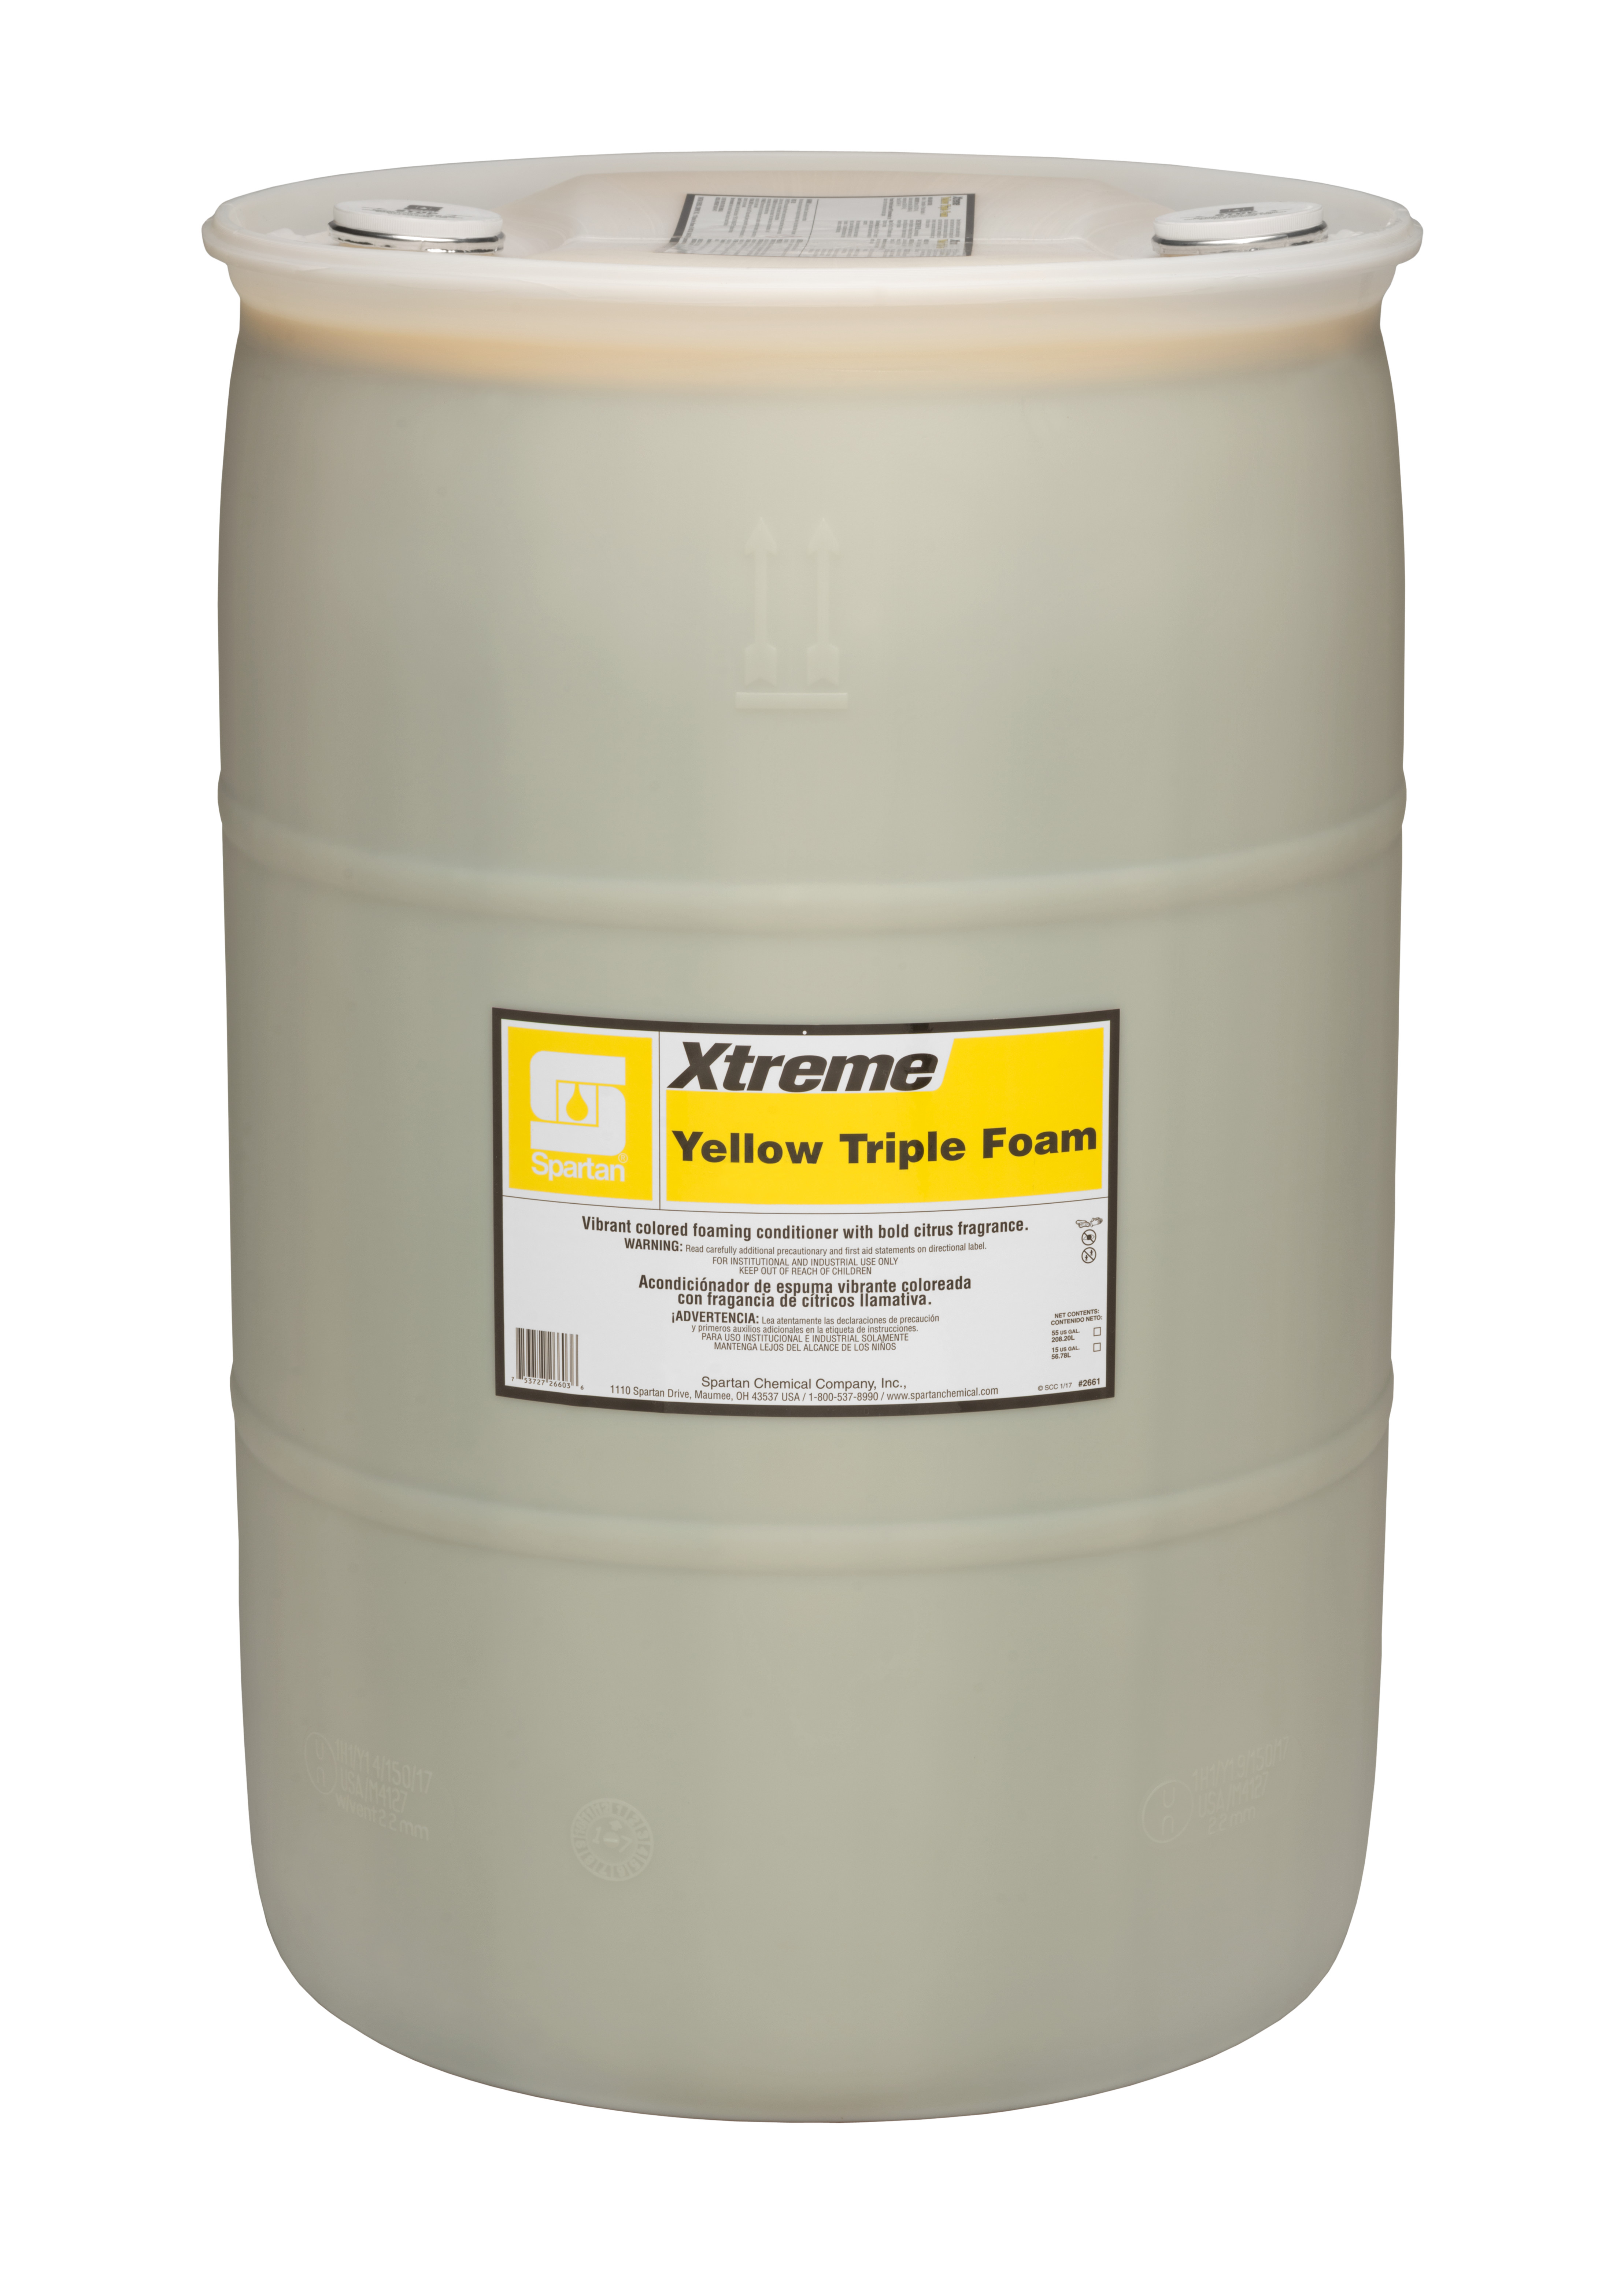 Spartan Chemical Company Xtreme Yellow Triple Foam Polish, 55 GAL DRUM